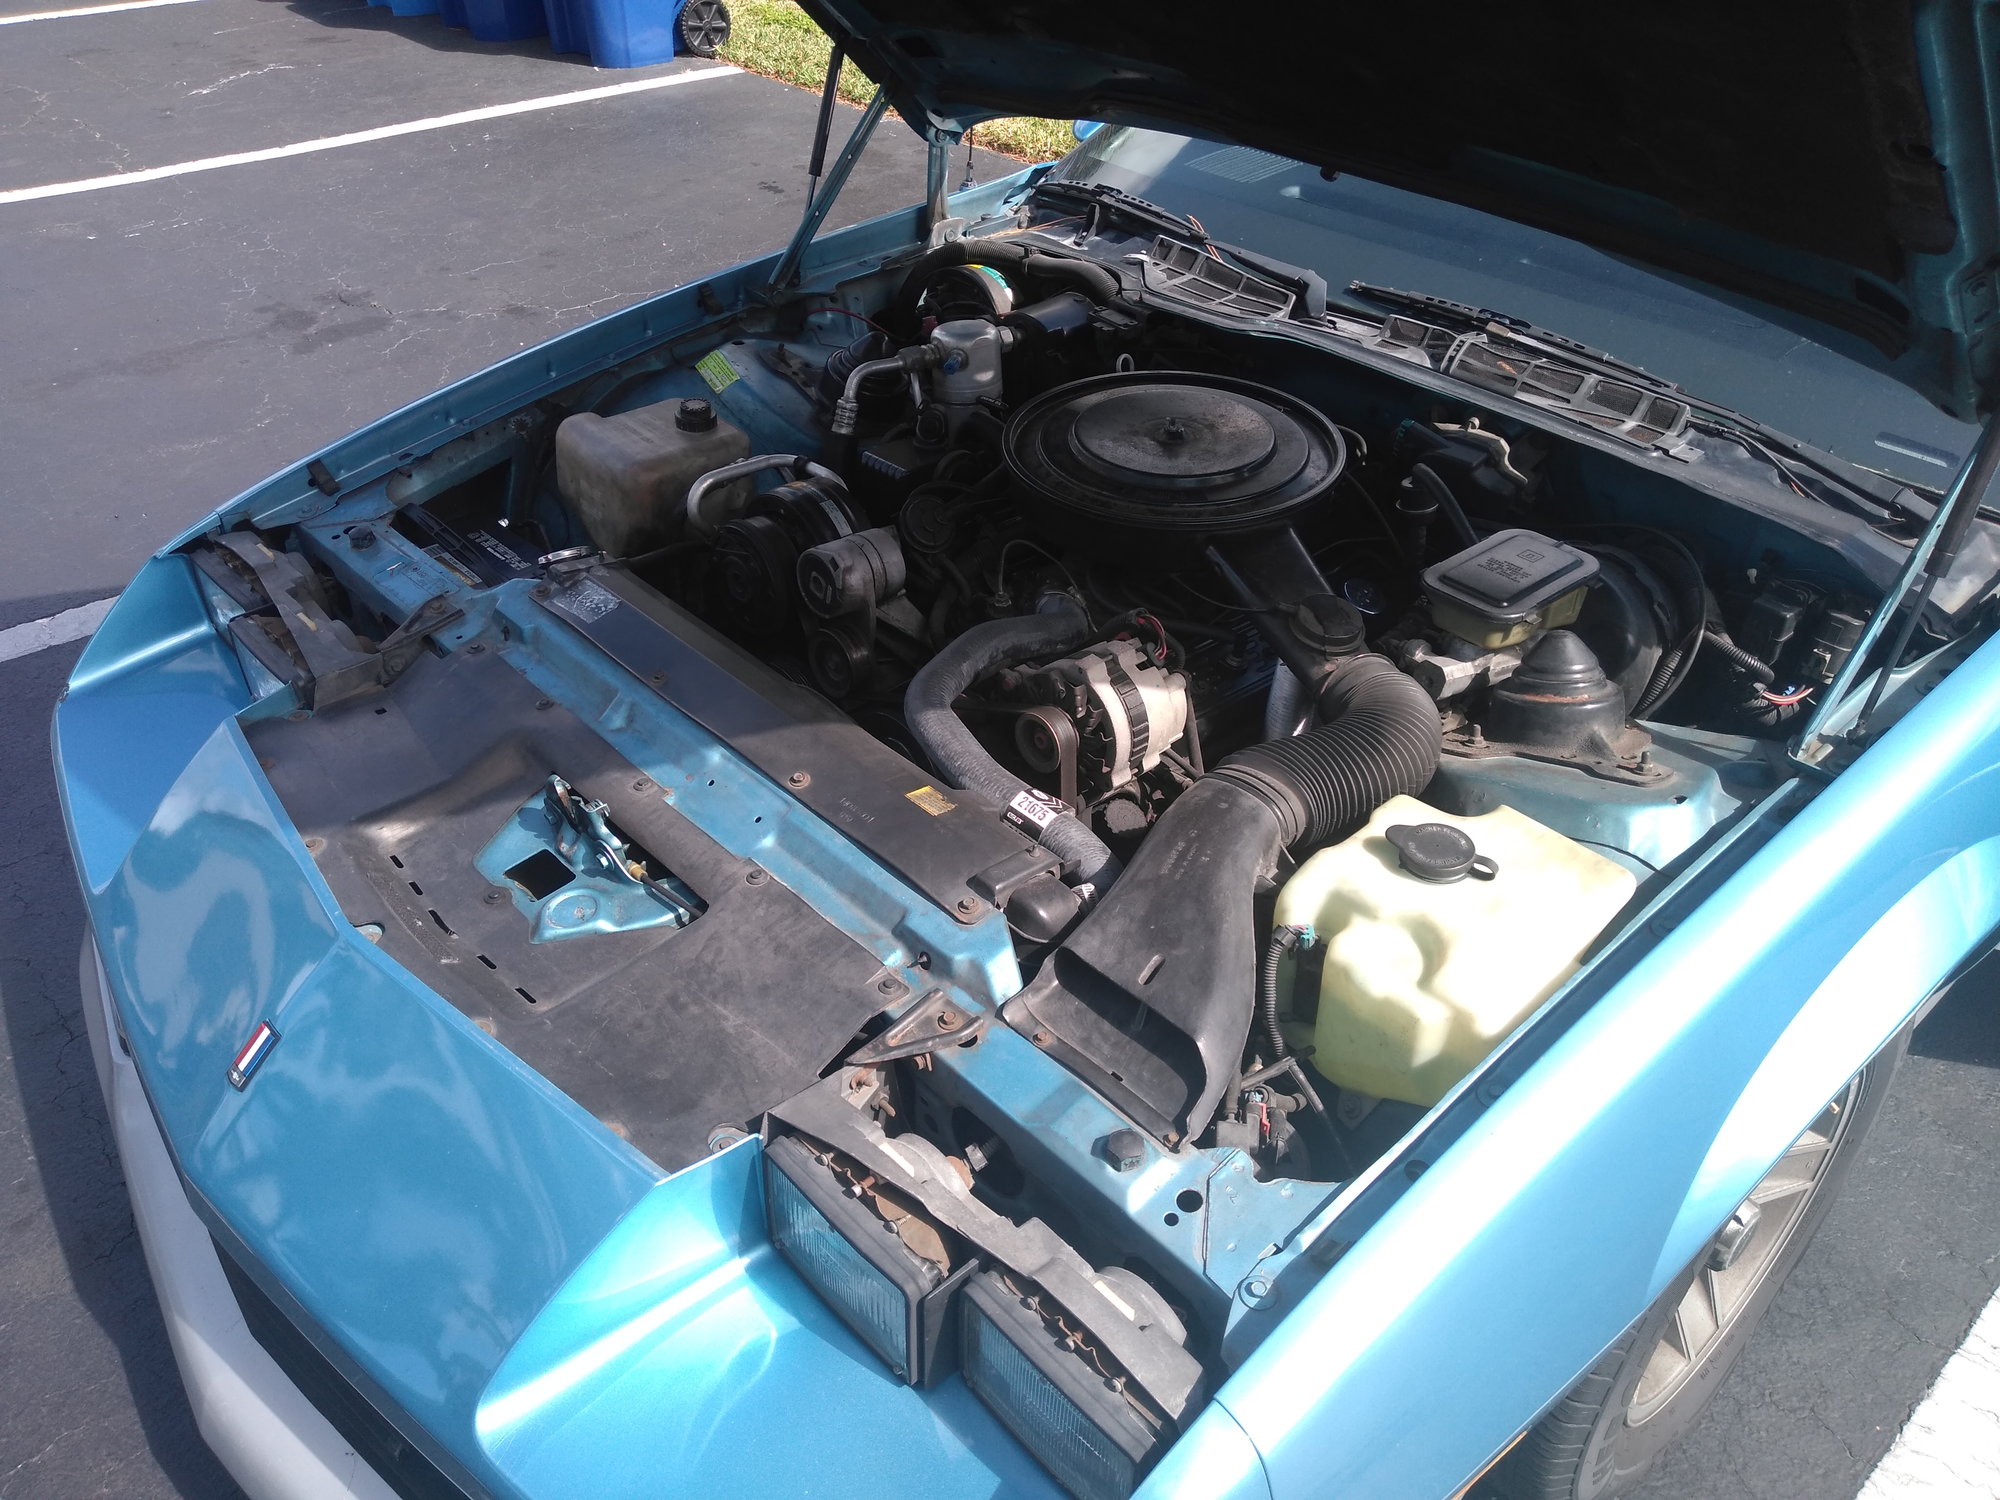 1988 Chevrolet Camaro - 1988 Chevrolet Camaro V8 Sport Coupe (Maui Blue) - Used - Sarasota, FL 34231, United States